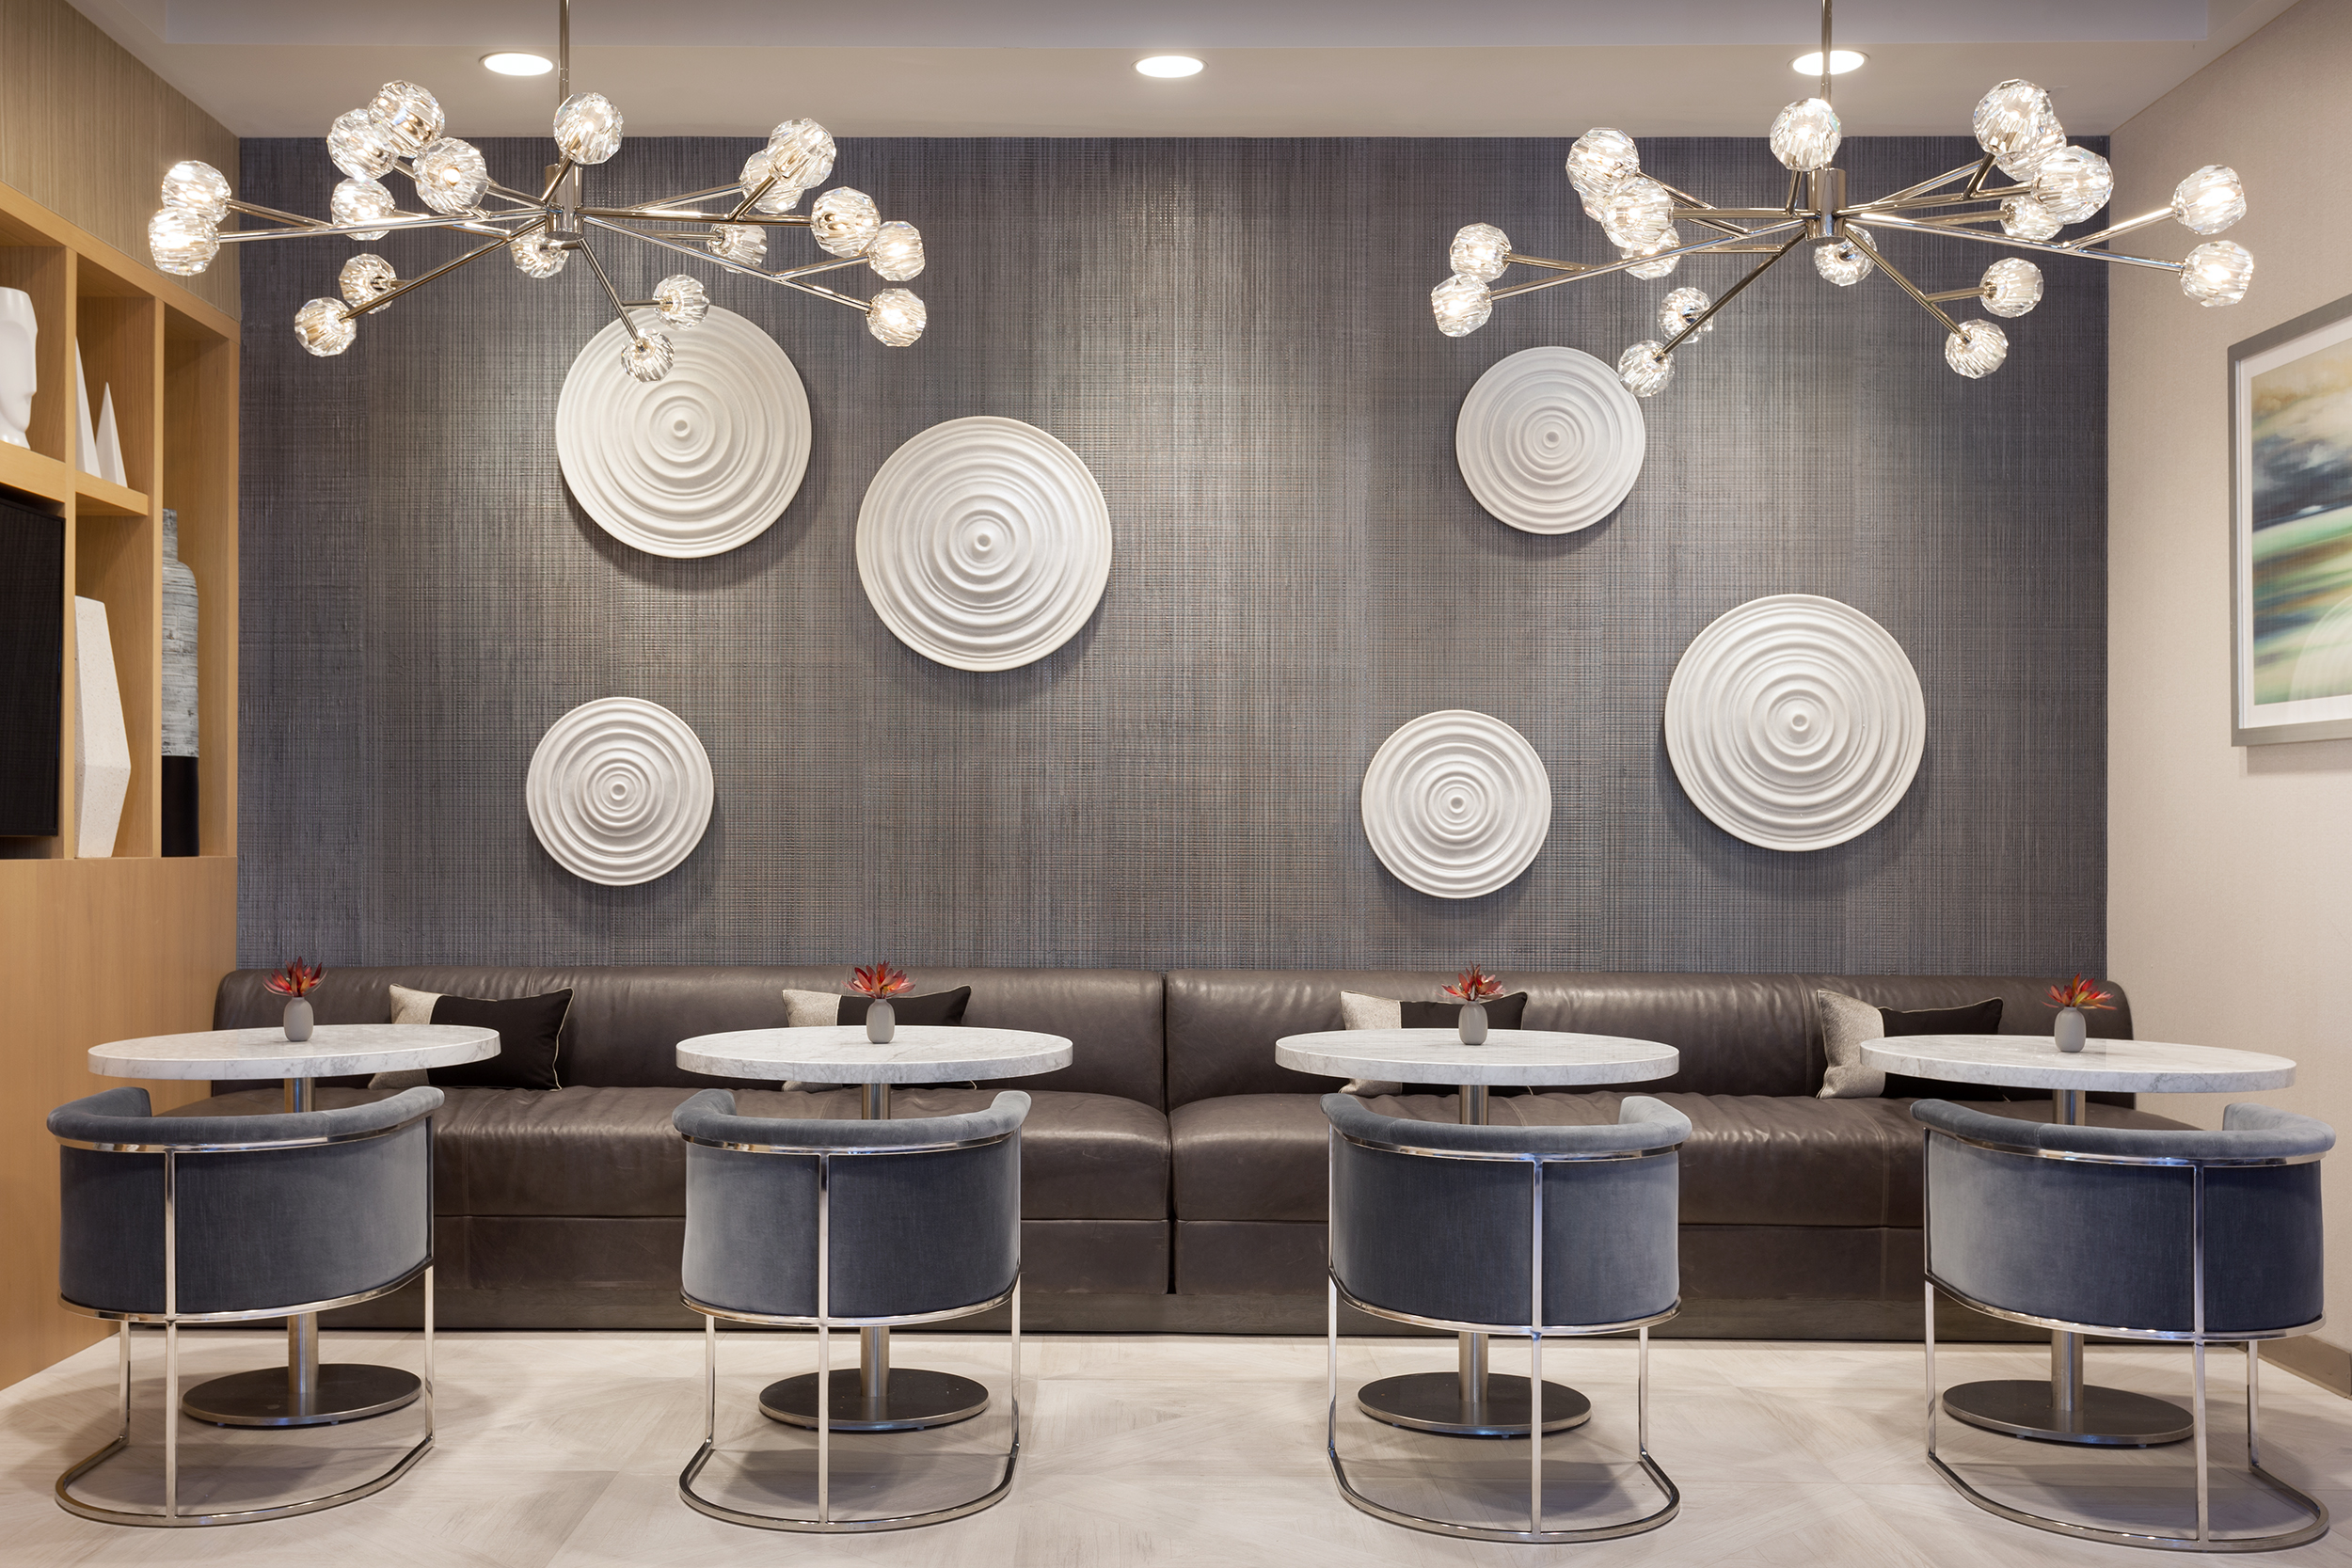 4 hotel hospitality styling dining wall art chandelier.jpg